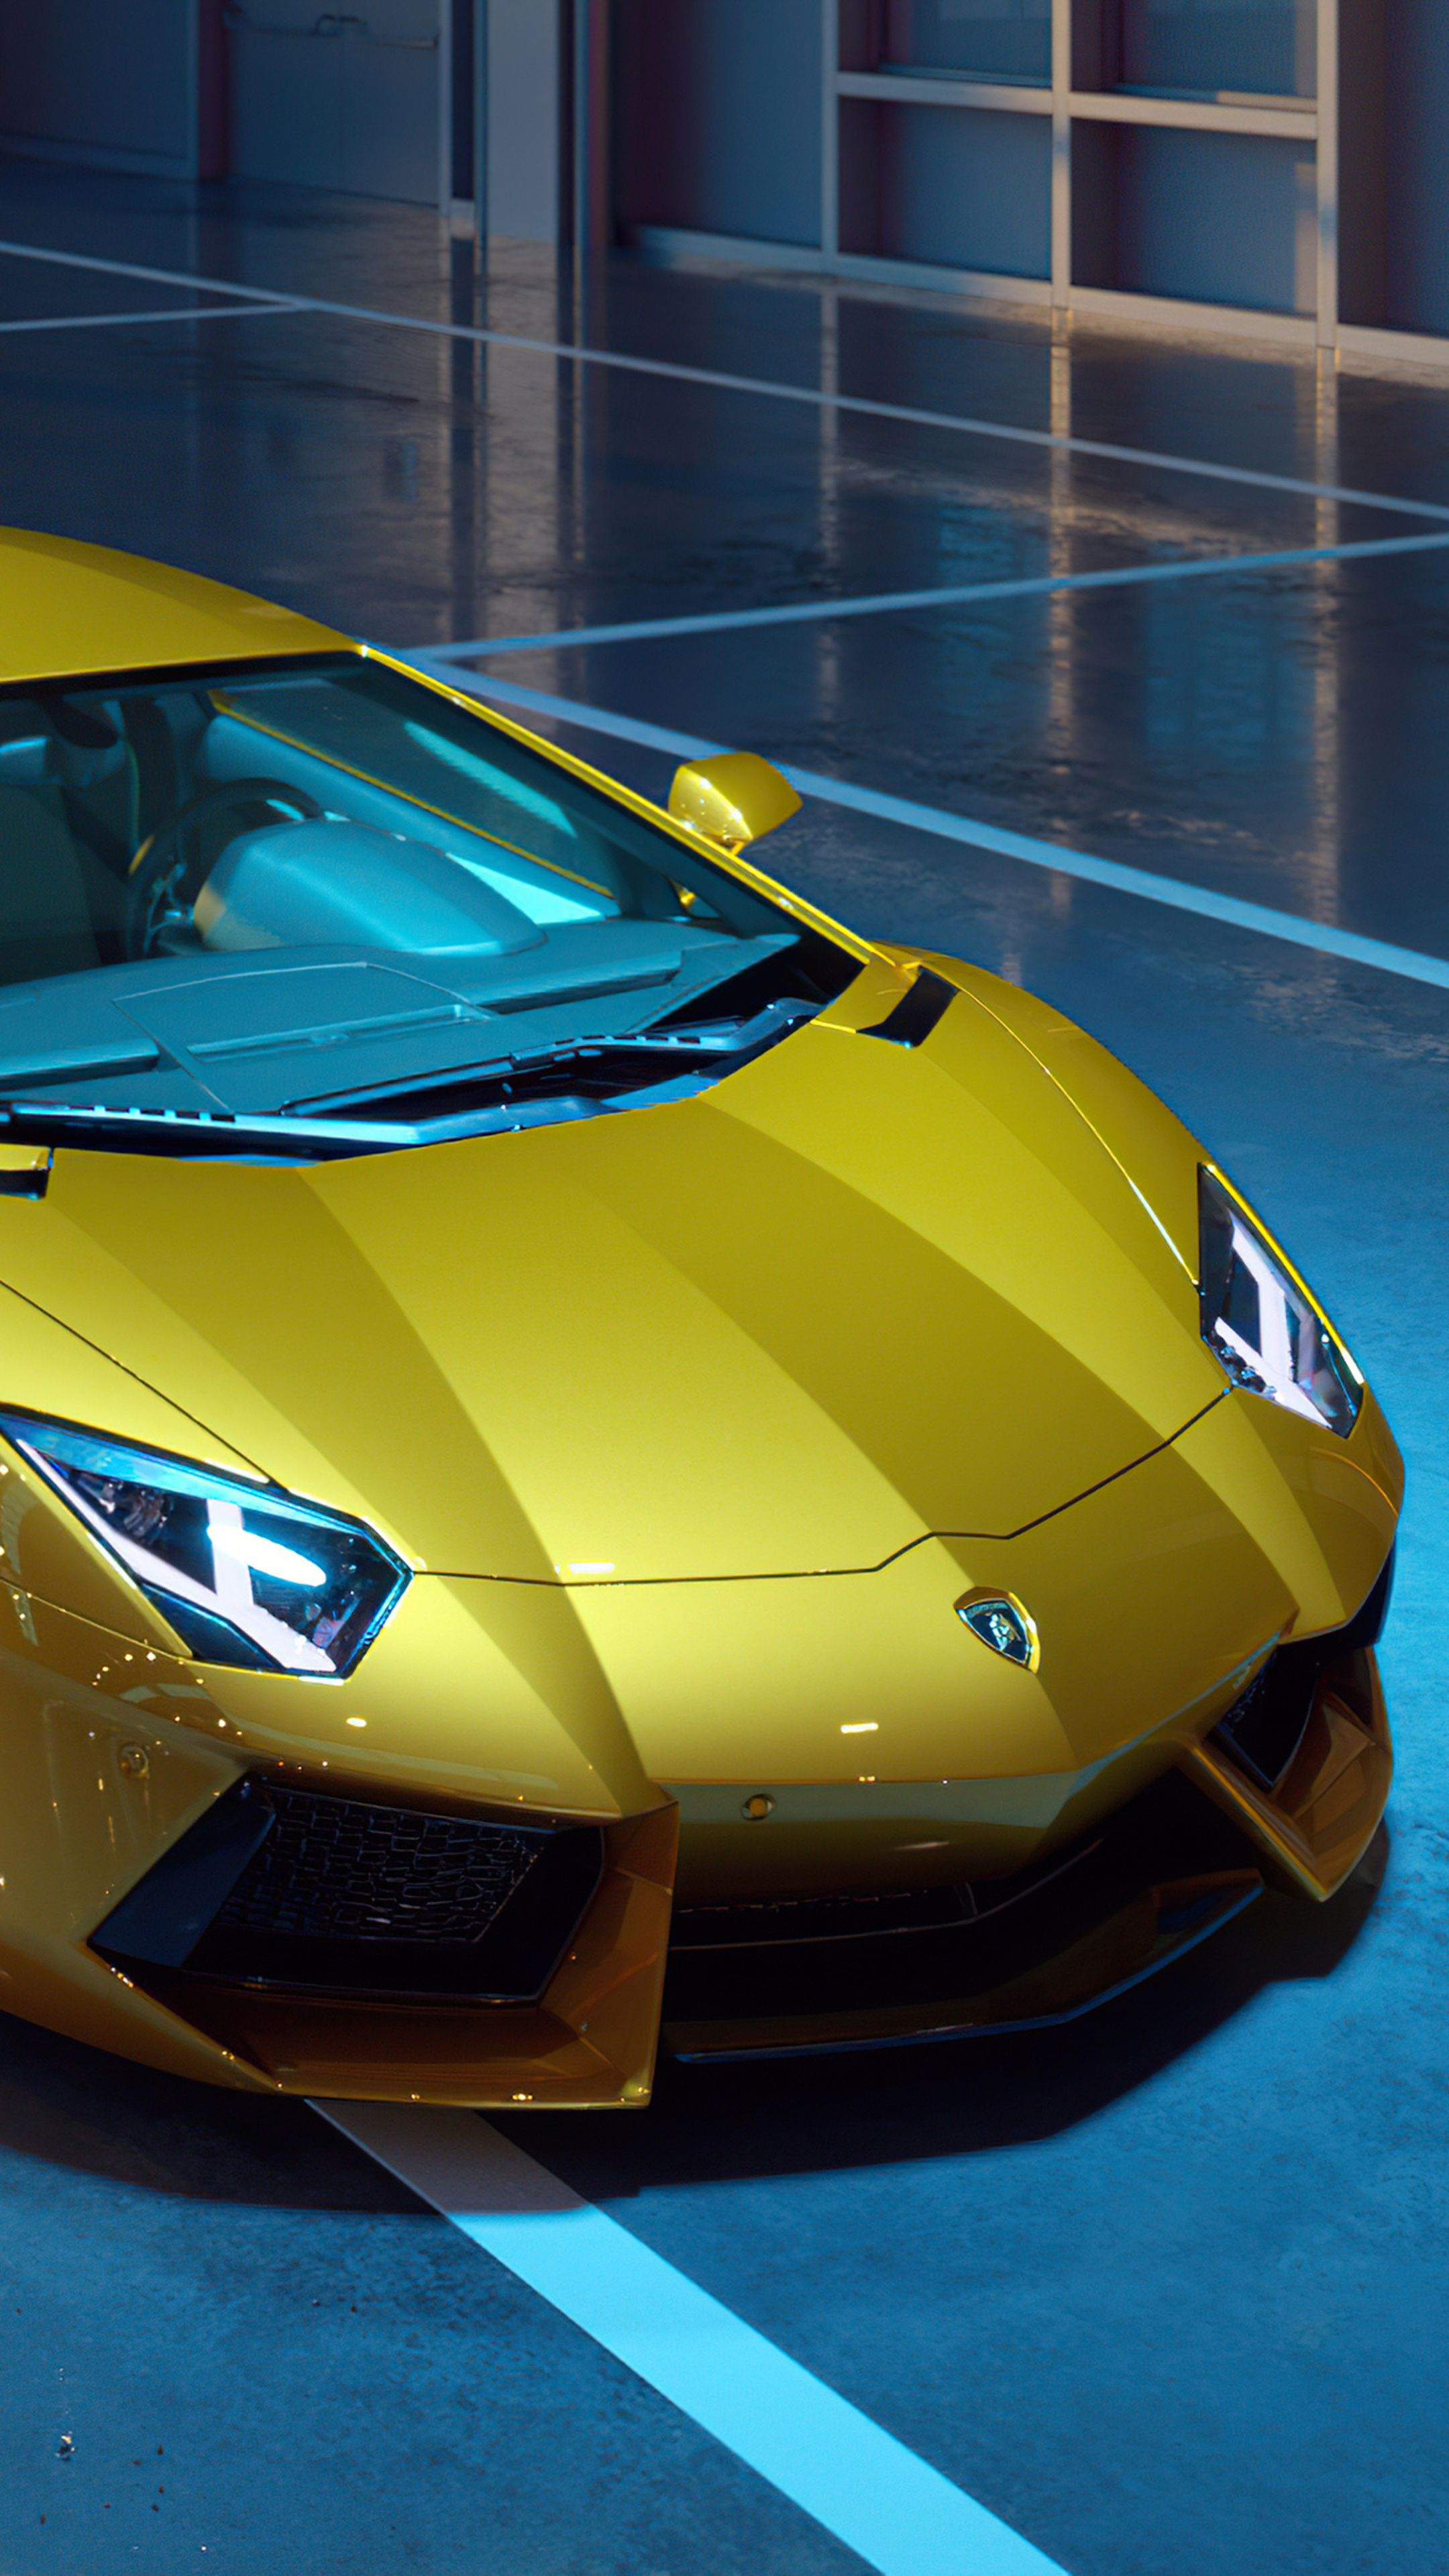 Gold Lamborghini Aventador, Dione forged wheels, Luxurious finish, Premium quality, 2160x3840 4K Handy